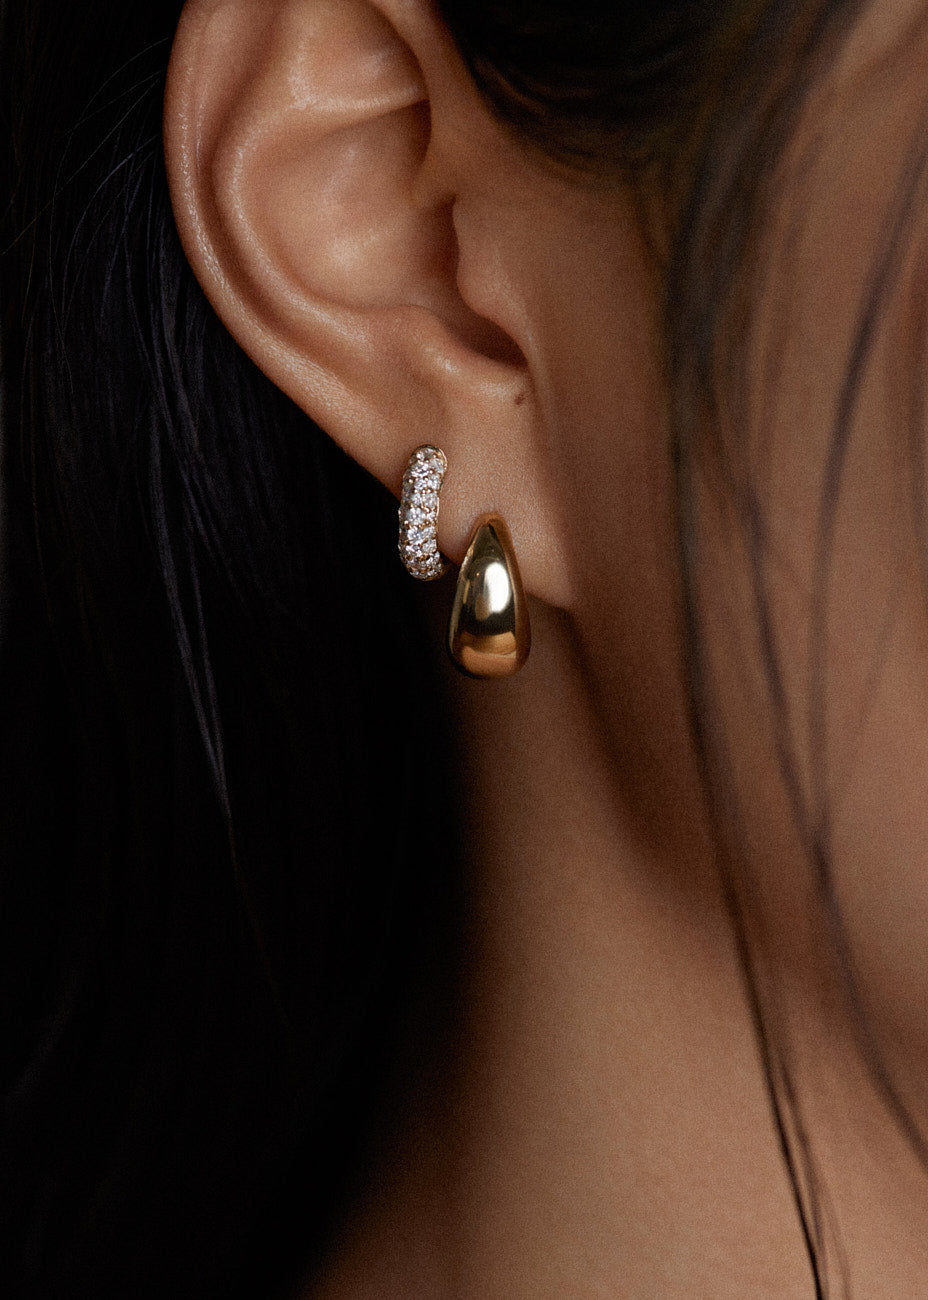 Buy Gold-Toned Earrings for Women by Shaya Online | Ajio.com